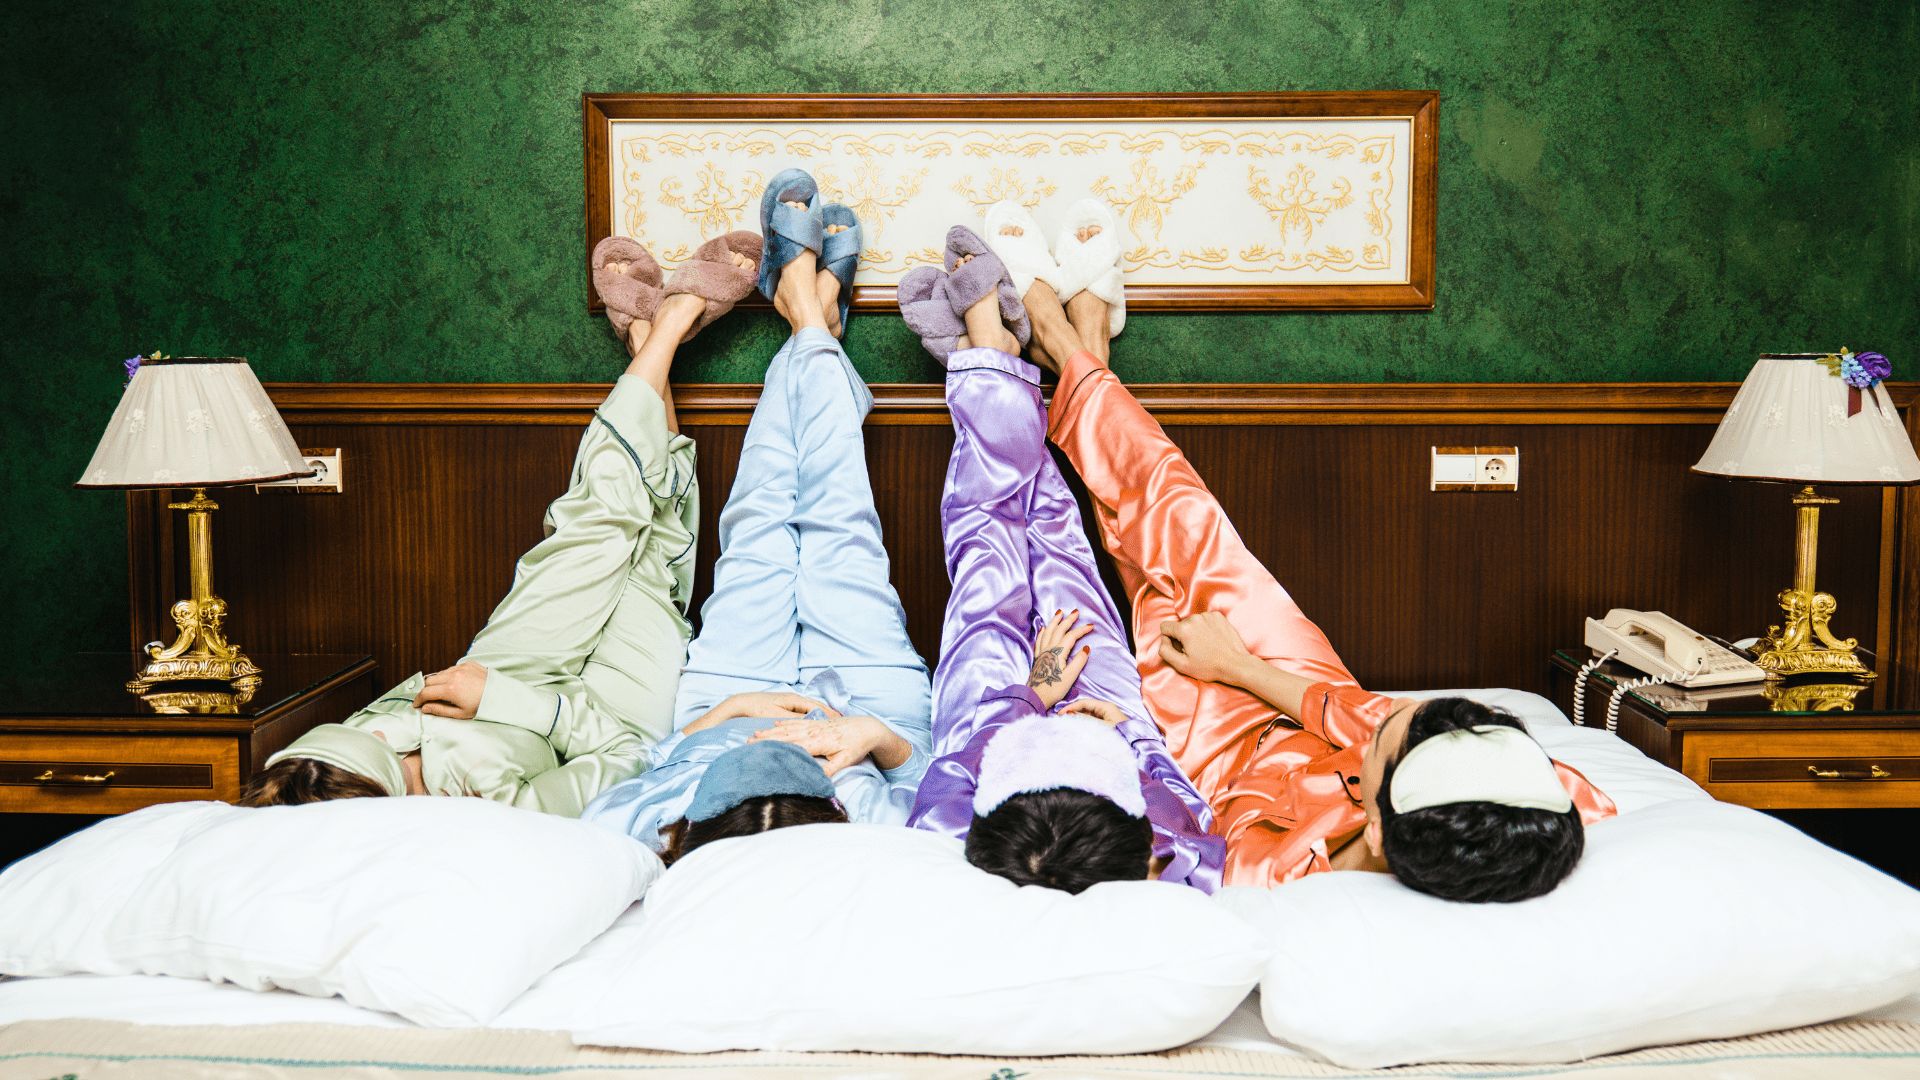 Pajama party! Ways to turn sleepwear into chic New Year's Eve